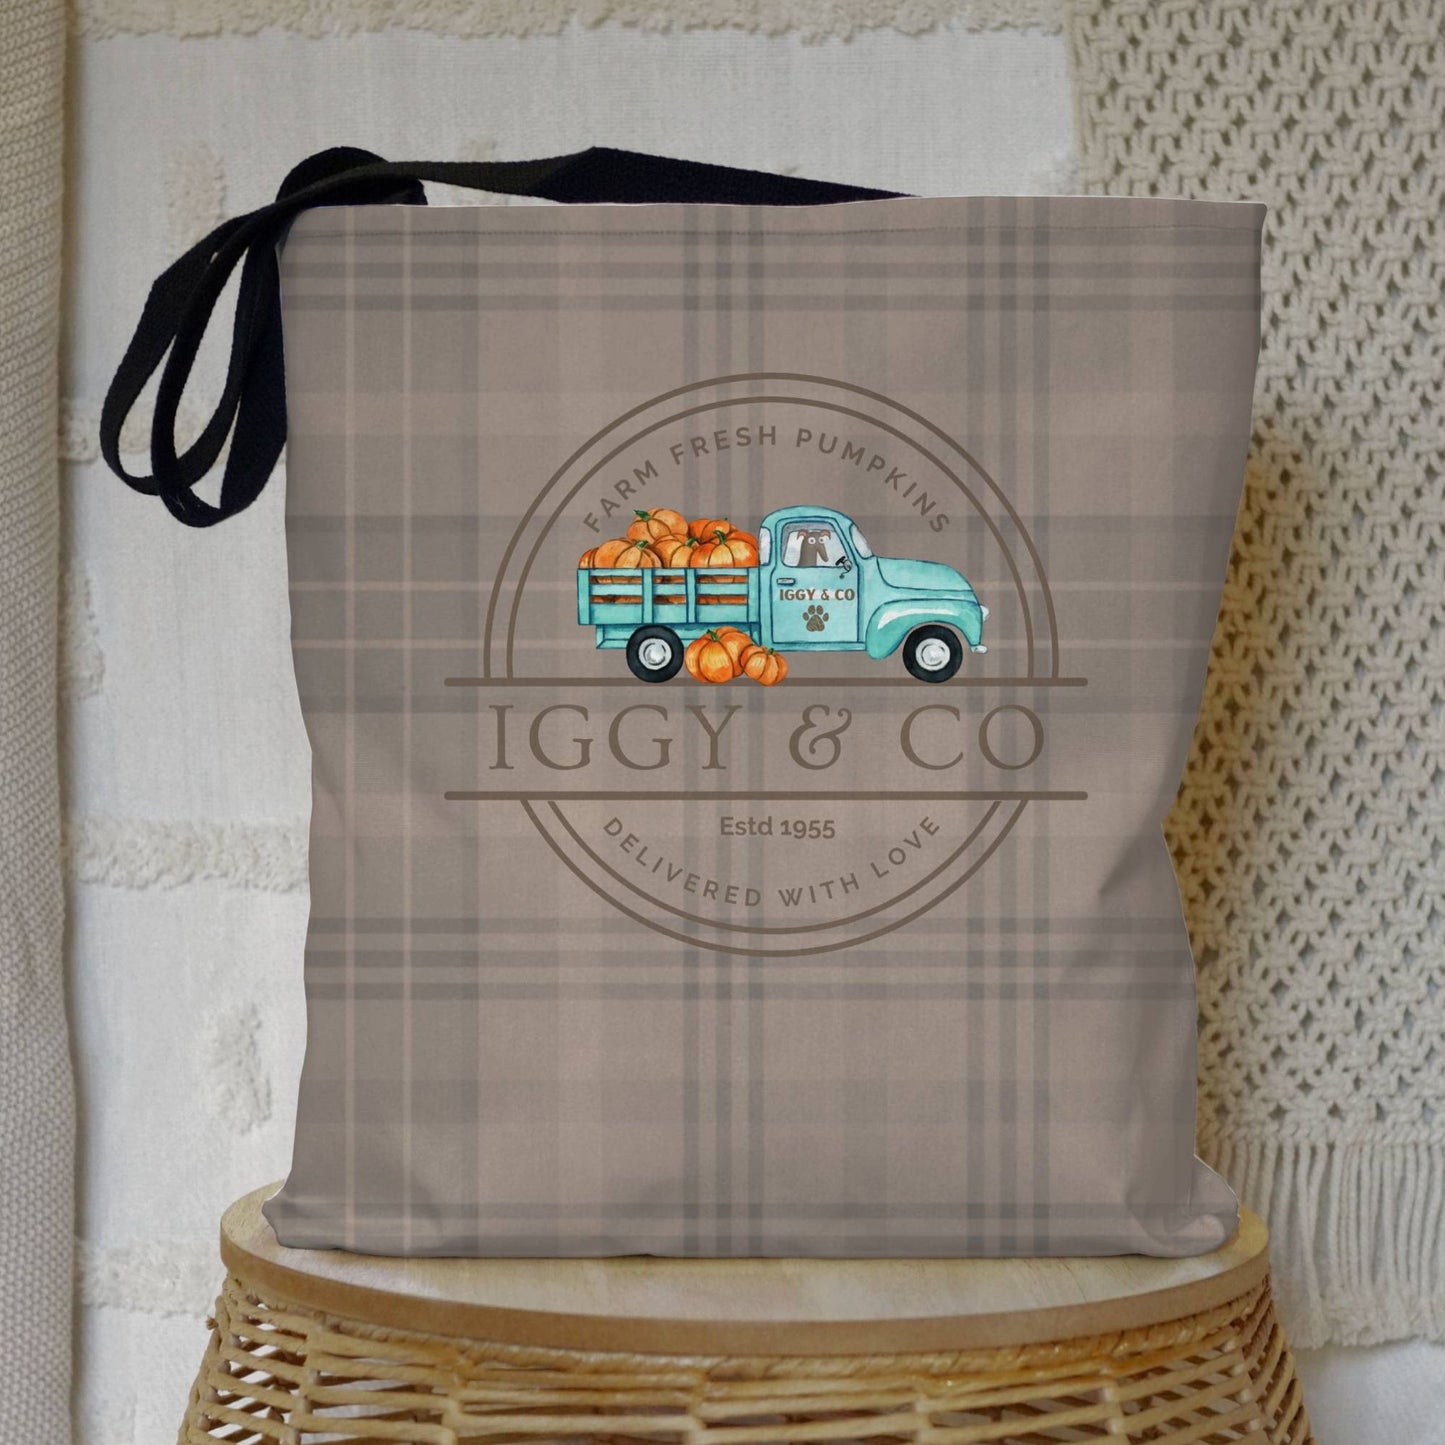 Iggy & Co Greyhound Pumpkin Farmer Tote Bag